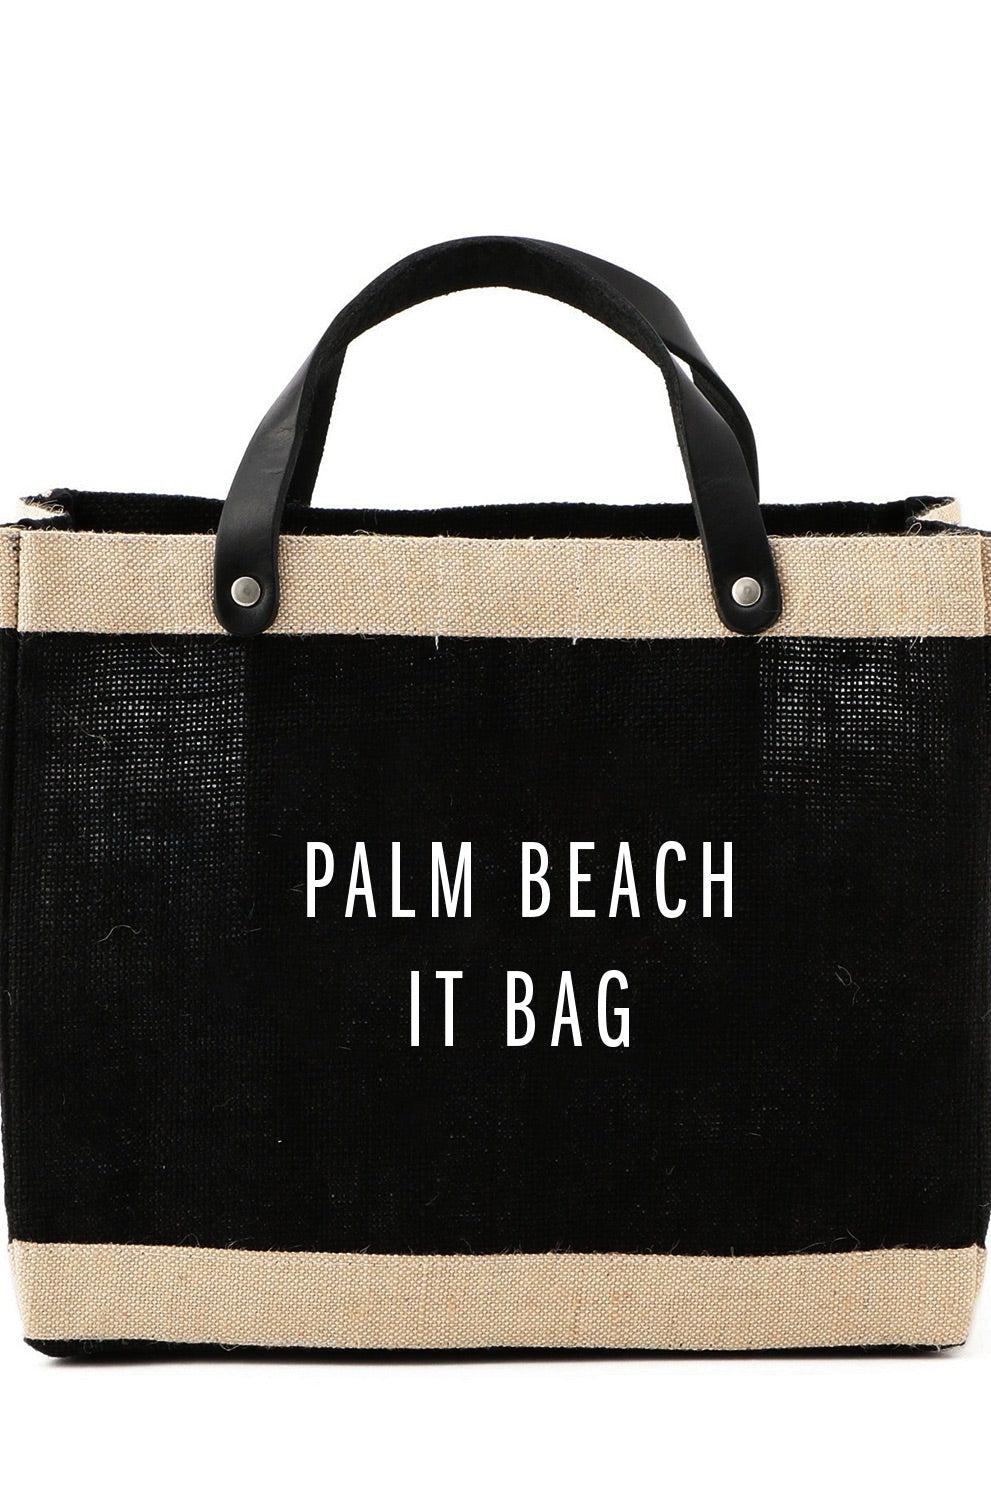 Palm Beach It Bag Small black - Premium Handbags from Marina St. Barth - Just $129.00! Shop now at Marina St Barth